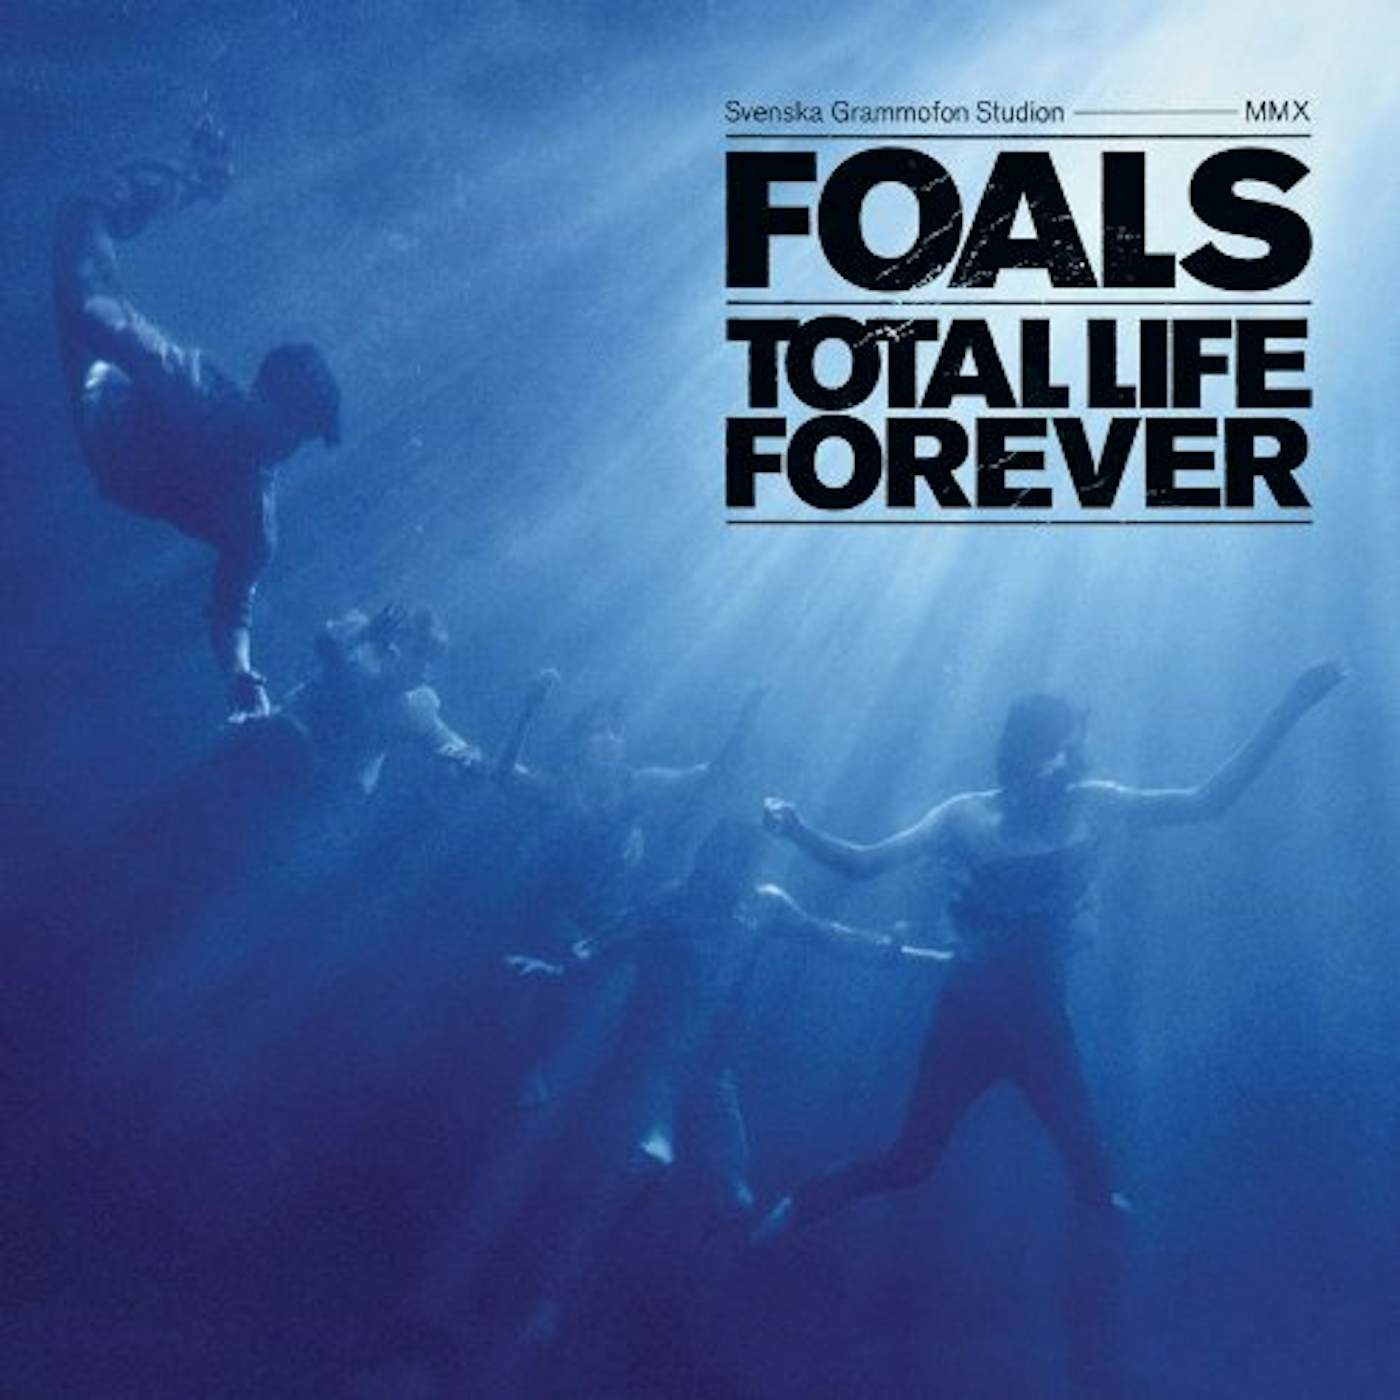 Foals Total Life Forever Vinyl Record